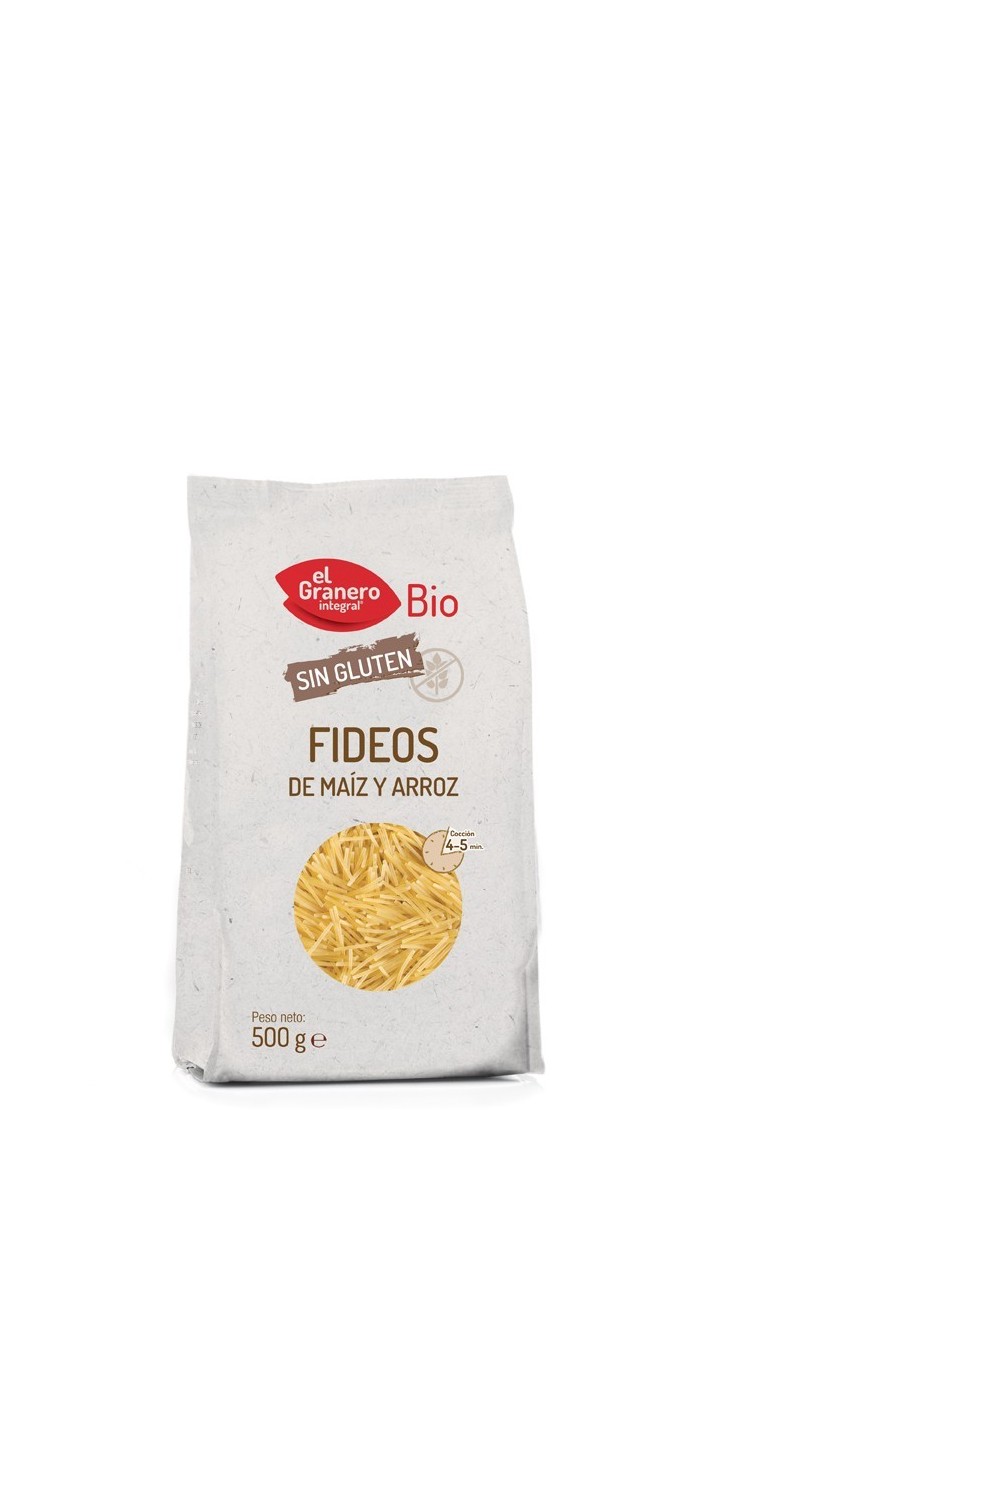 Granero Fideos De Maiz y Arroz Sin Gluten Bio 500g